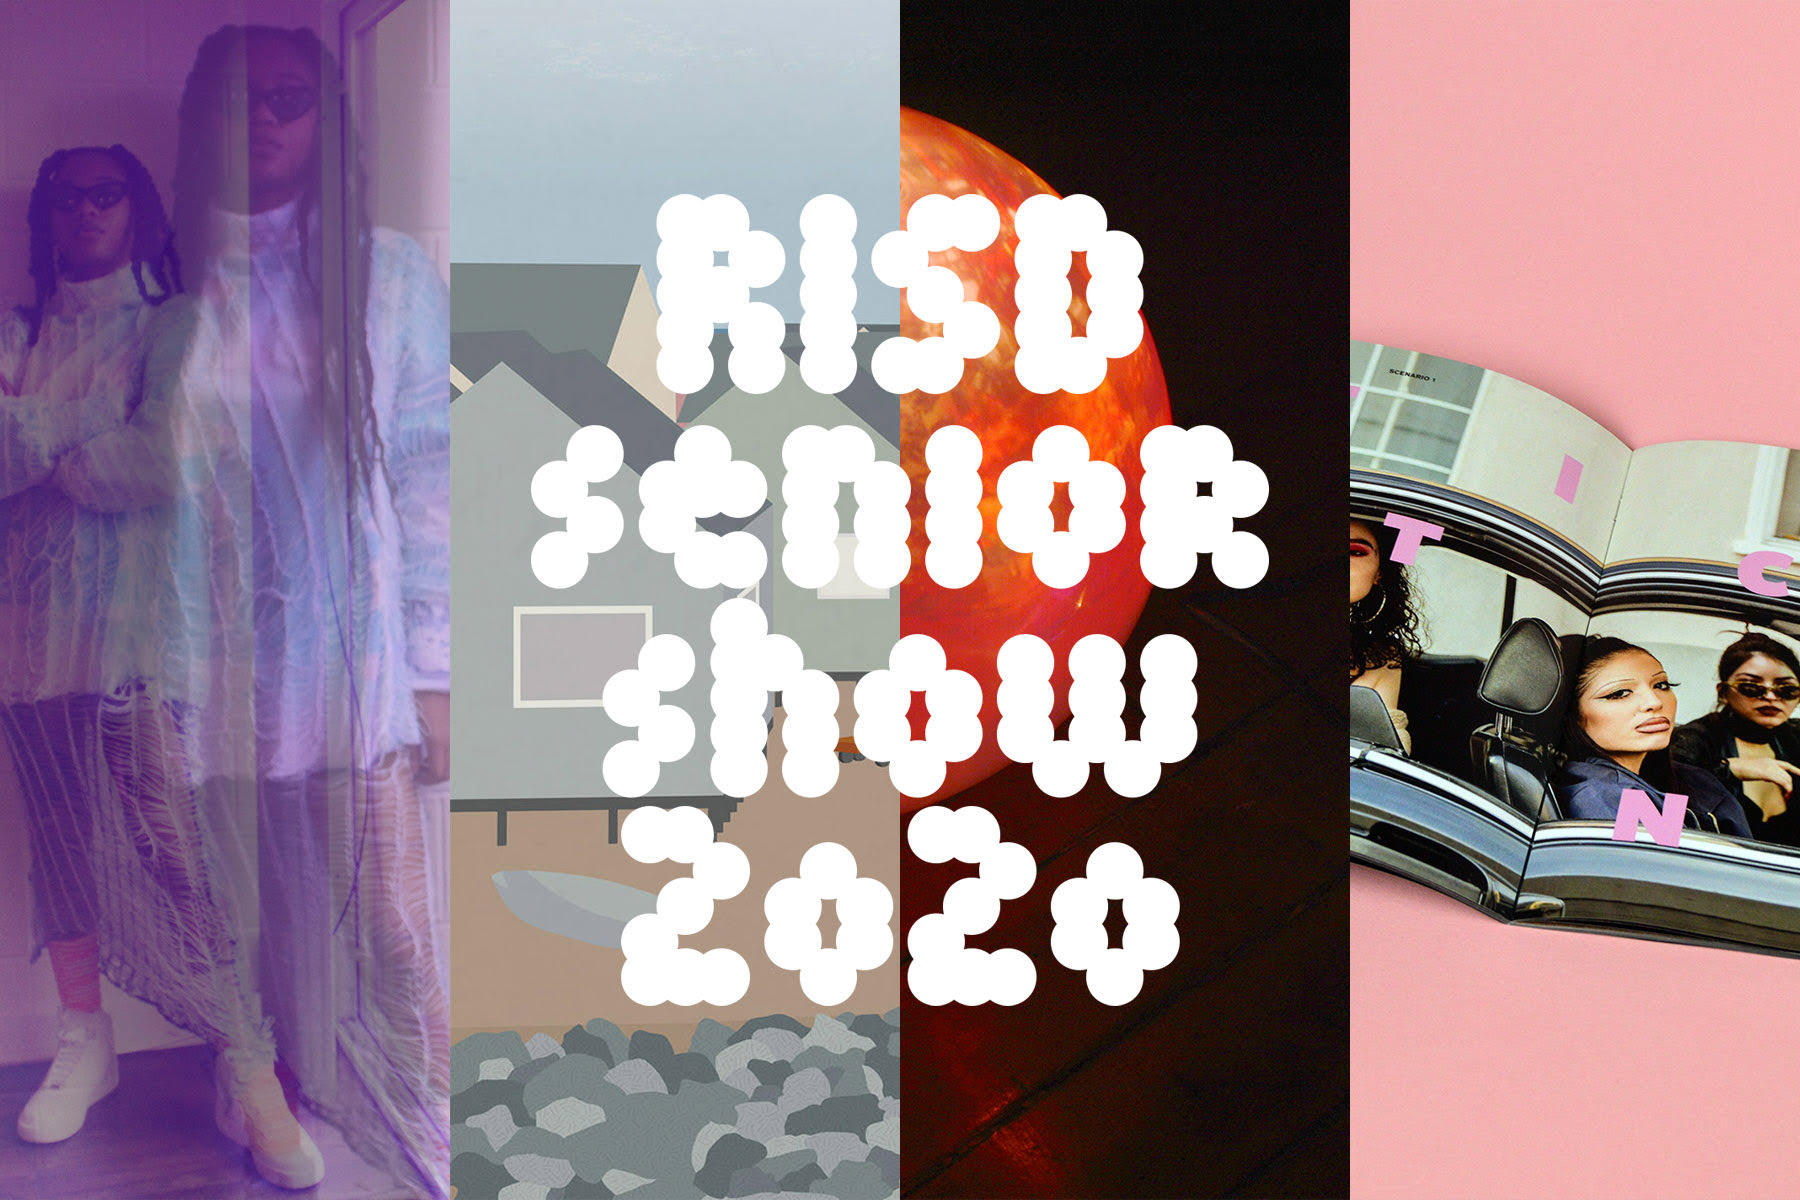 RISD Senior Show 2020 RISD Alumni